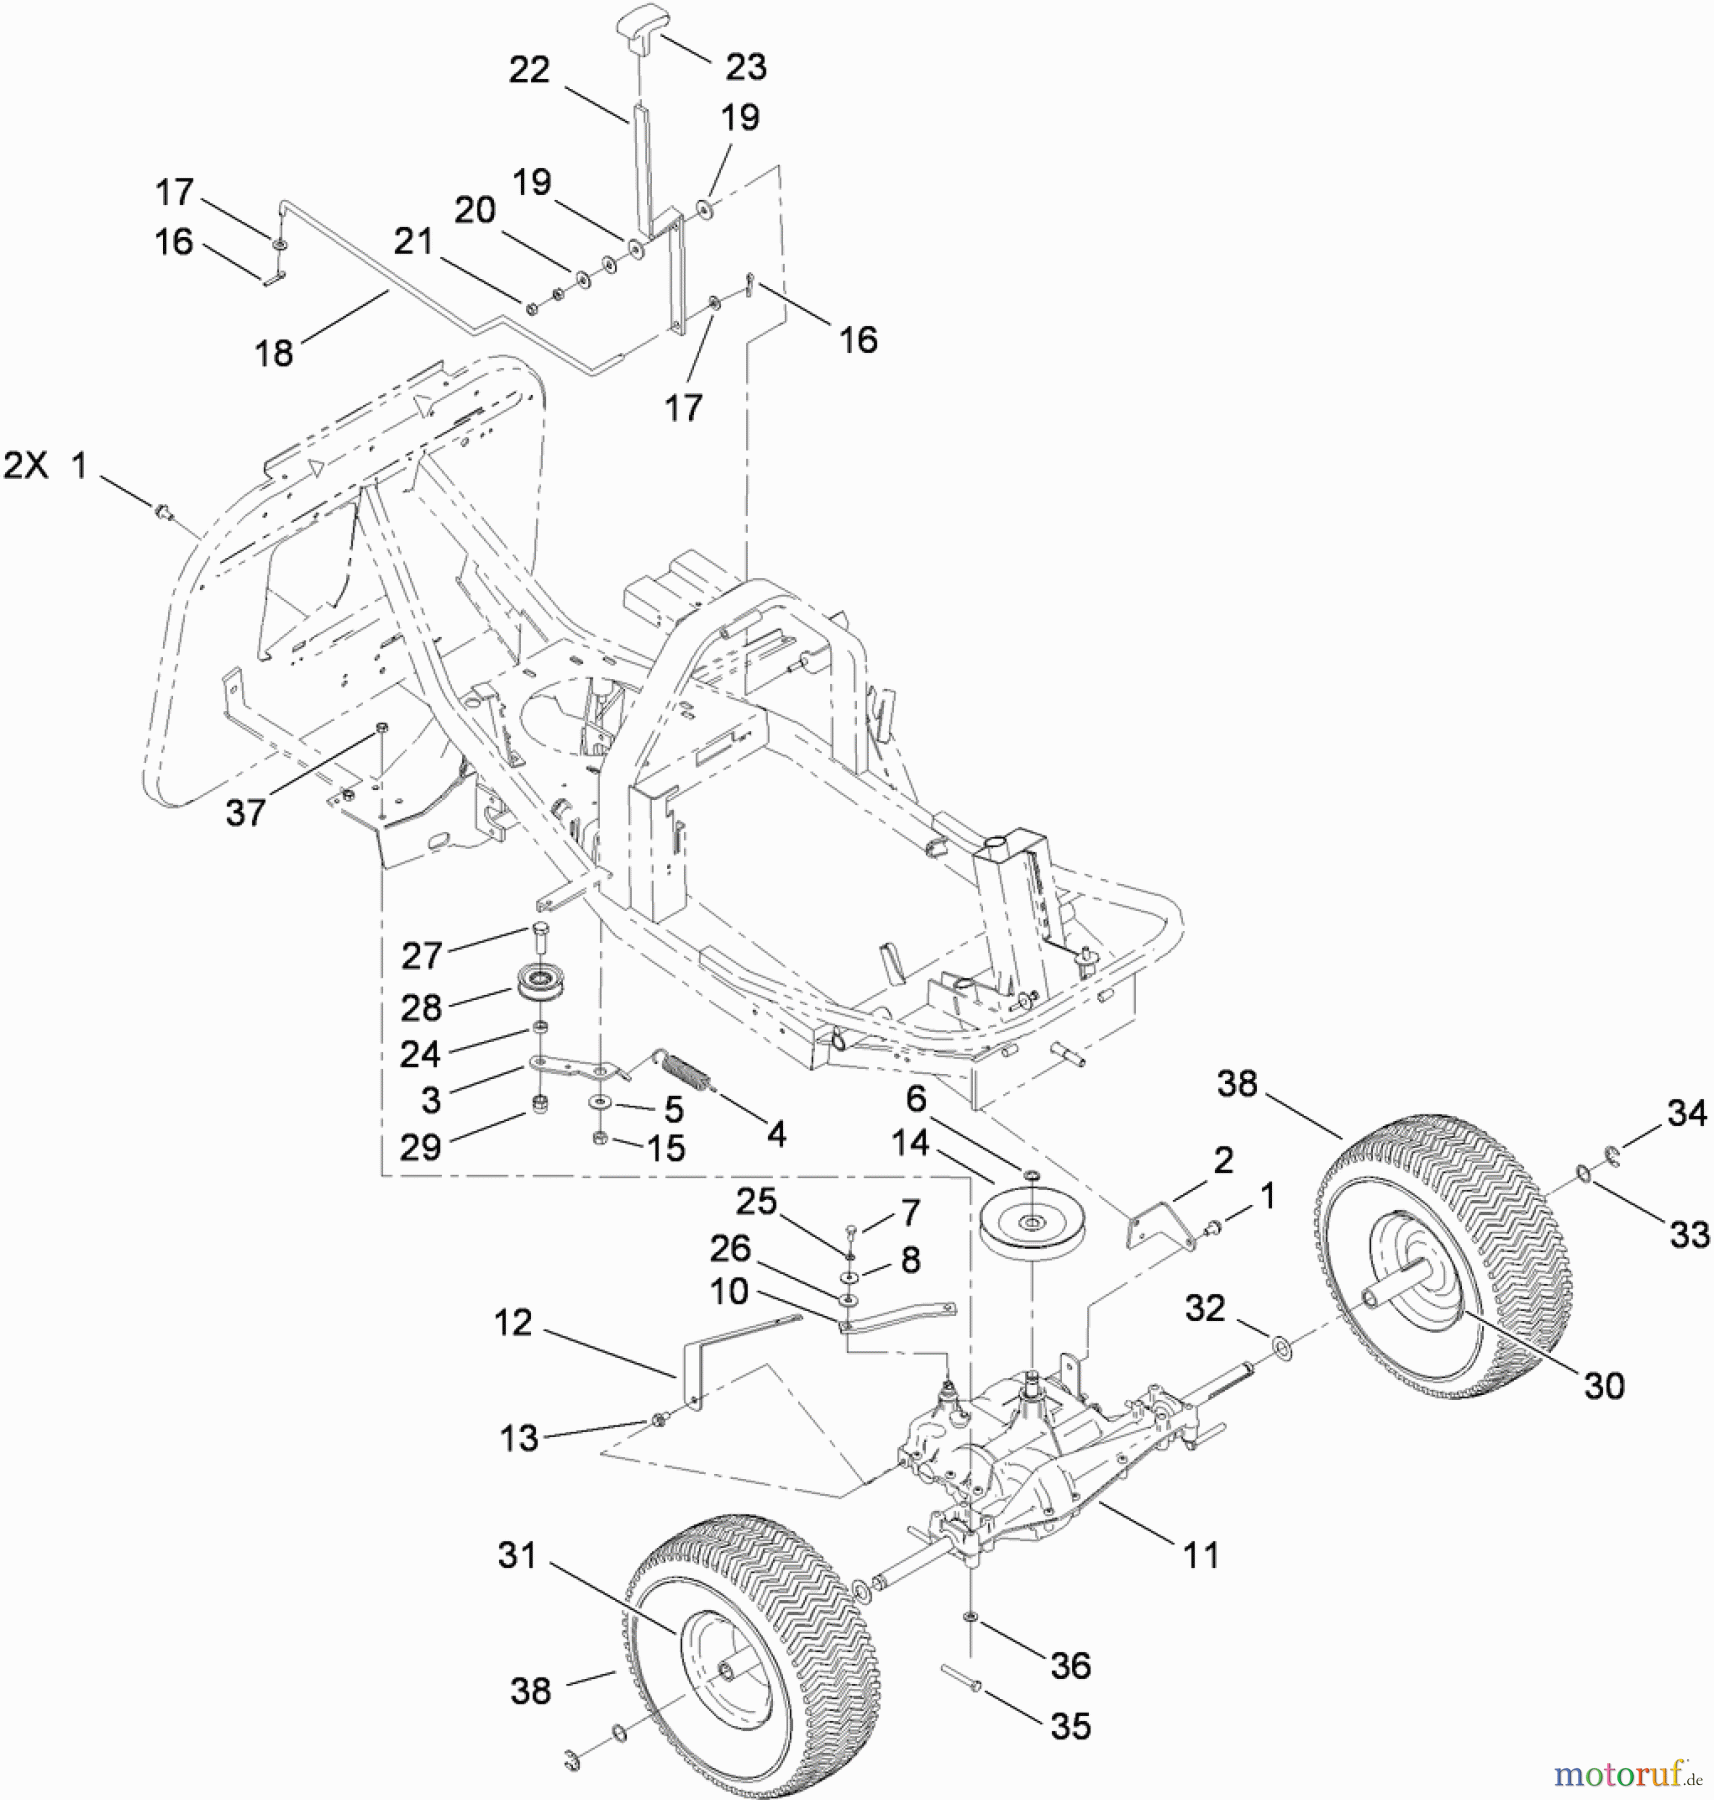  Toro Neu Mowers, Rear-Engine Rider 70185 (G132) - Toro G132 Rear-Engine Riding Mower, 2010 (310000001-310999999) GEAR TRANSMISSION AND LINKAGE ASSEMBLY